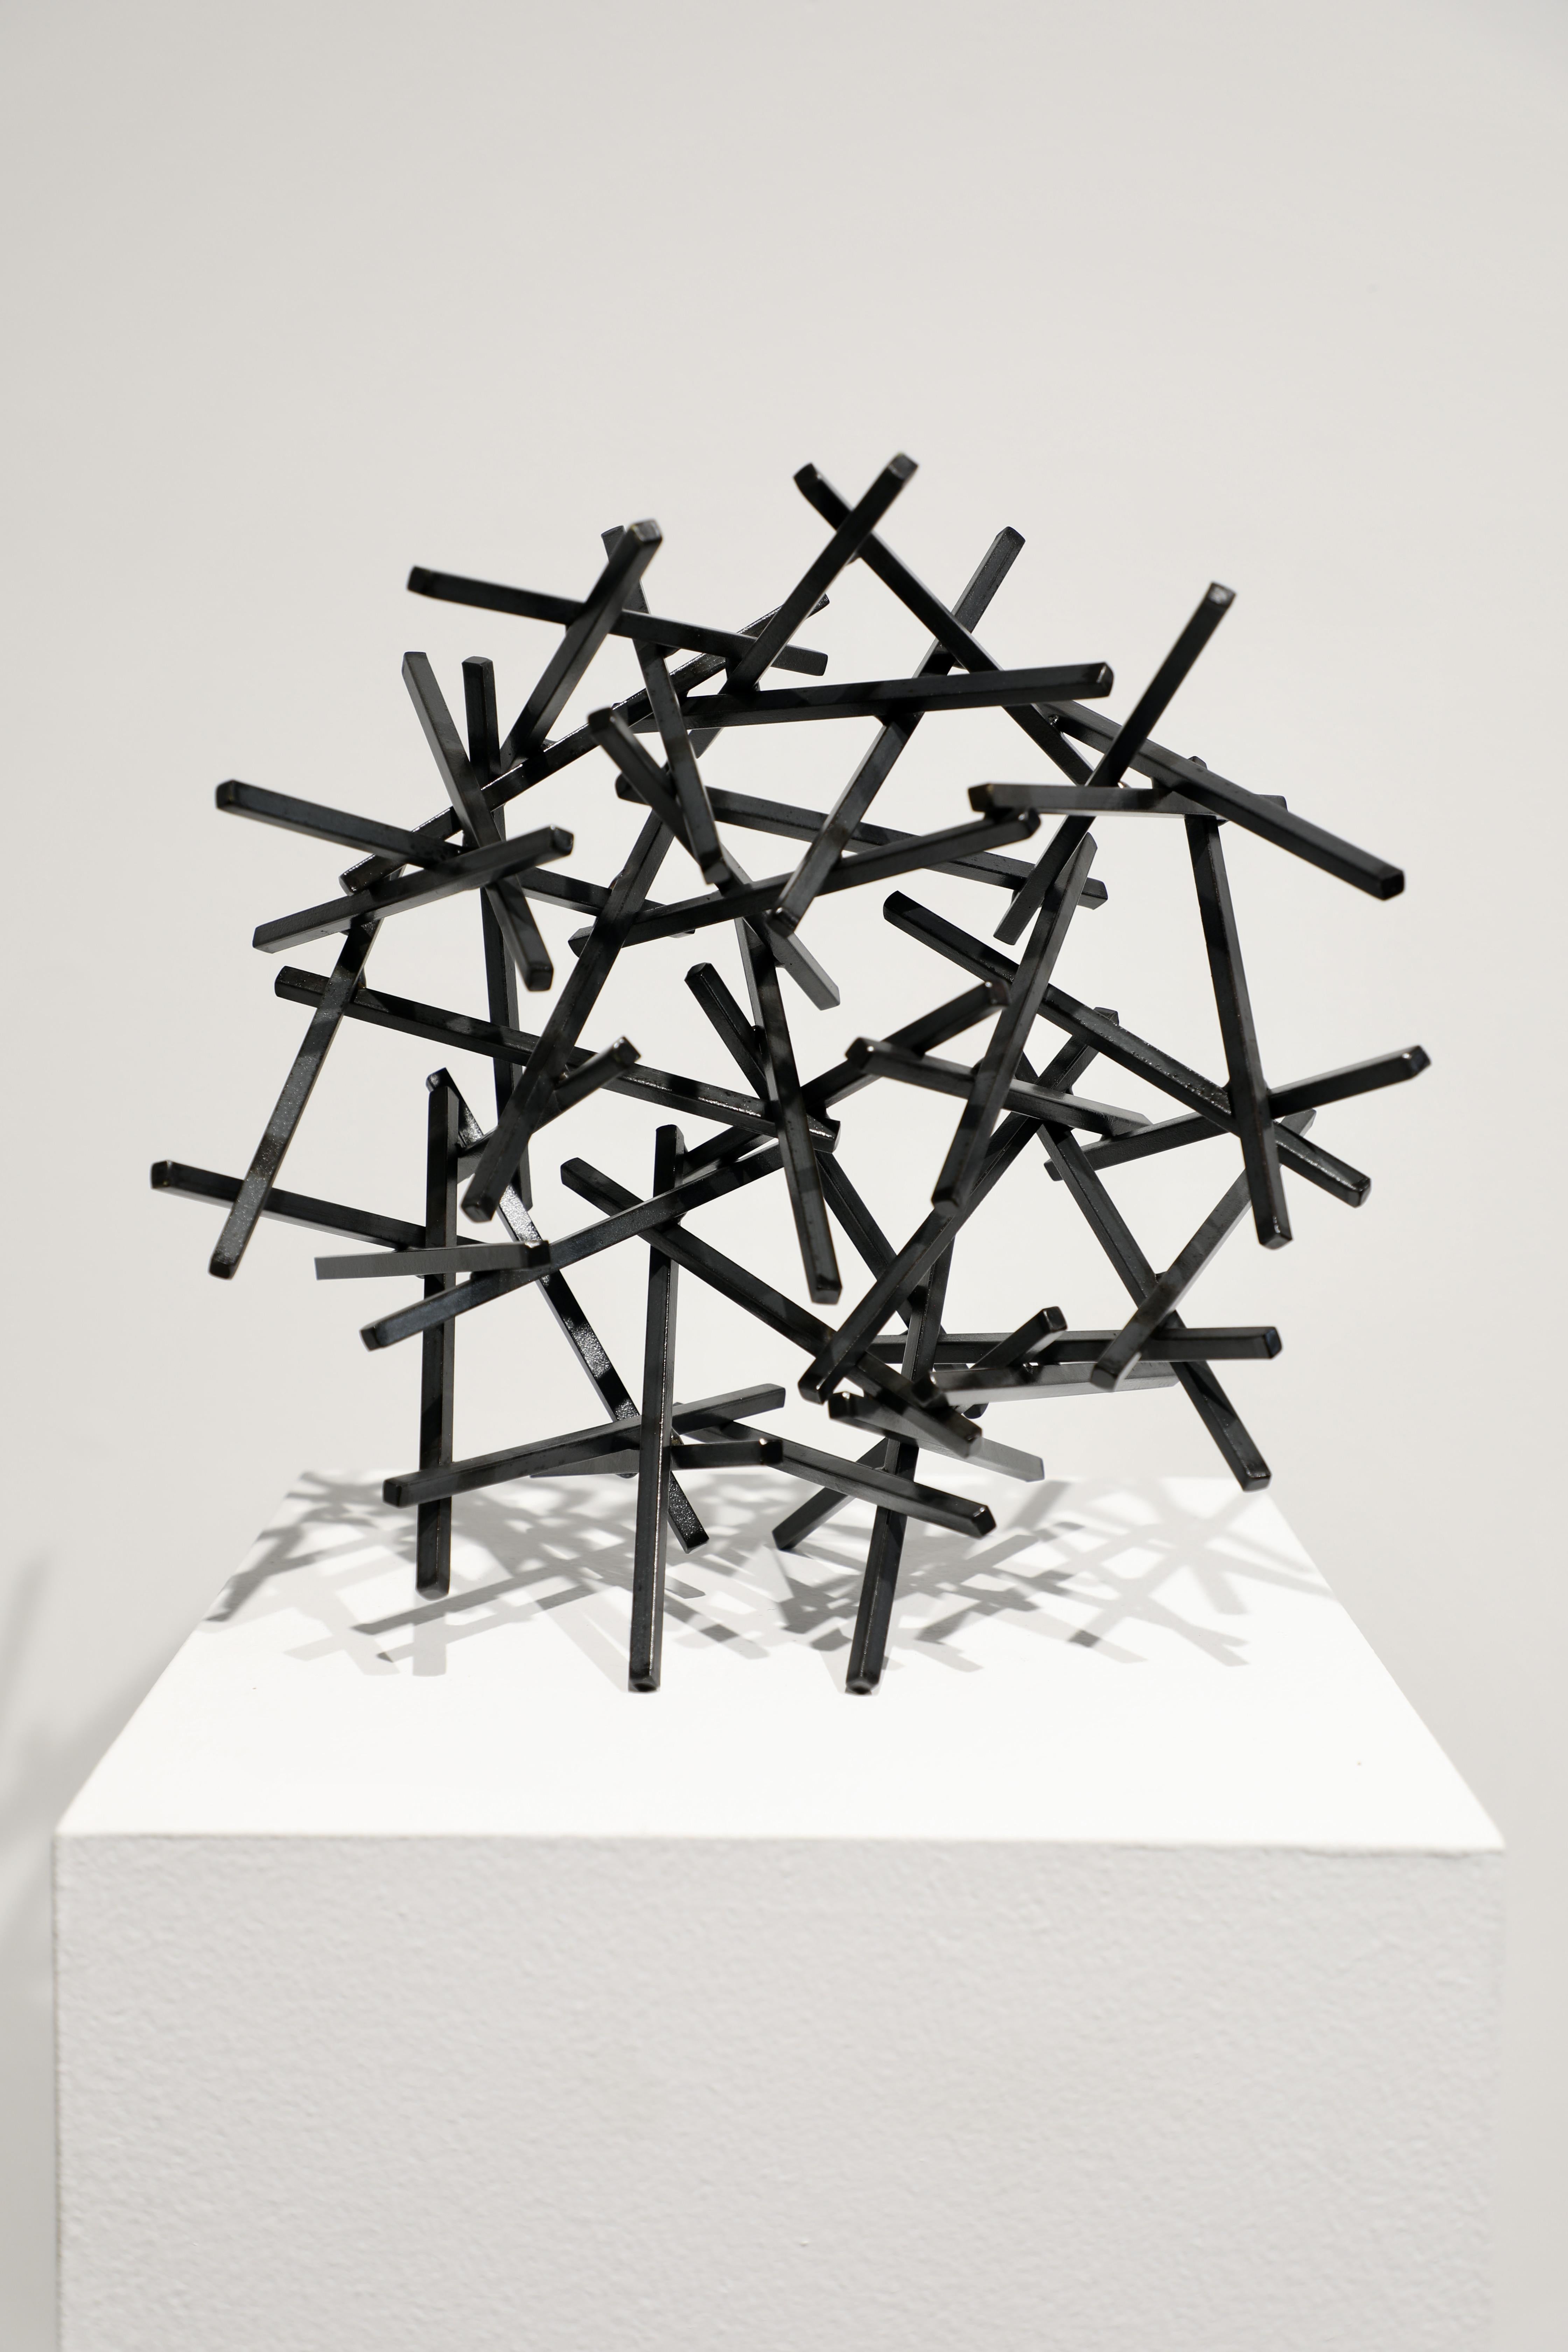 Matt Devine Abstract Sculpture - Studio Study 22-14